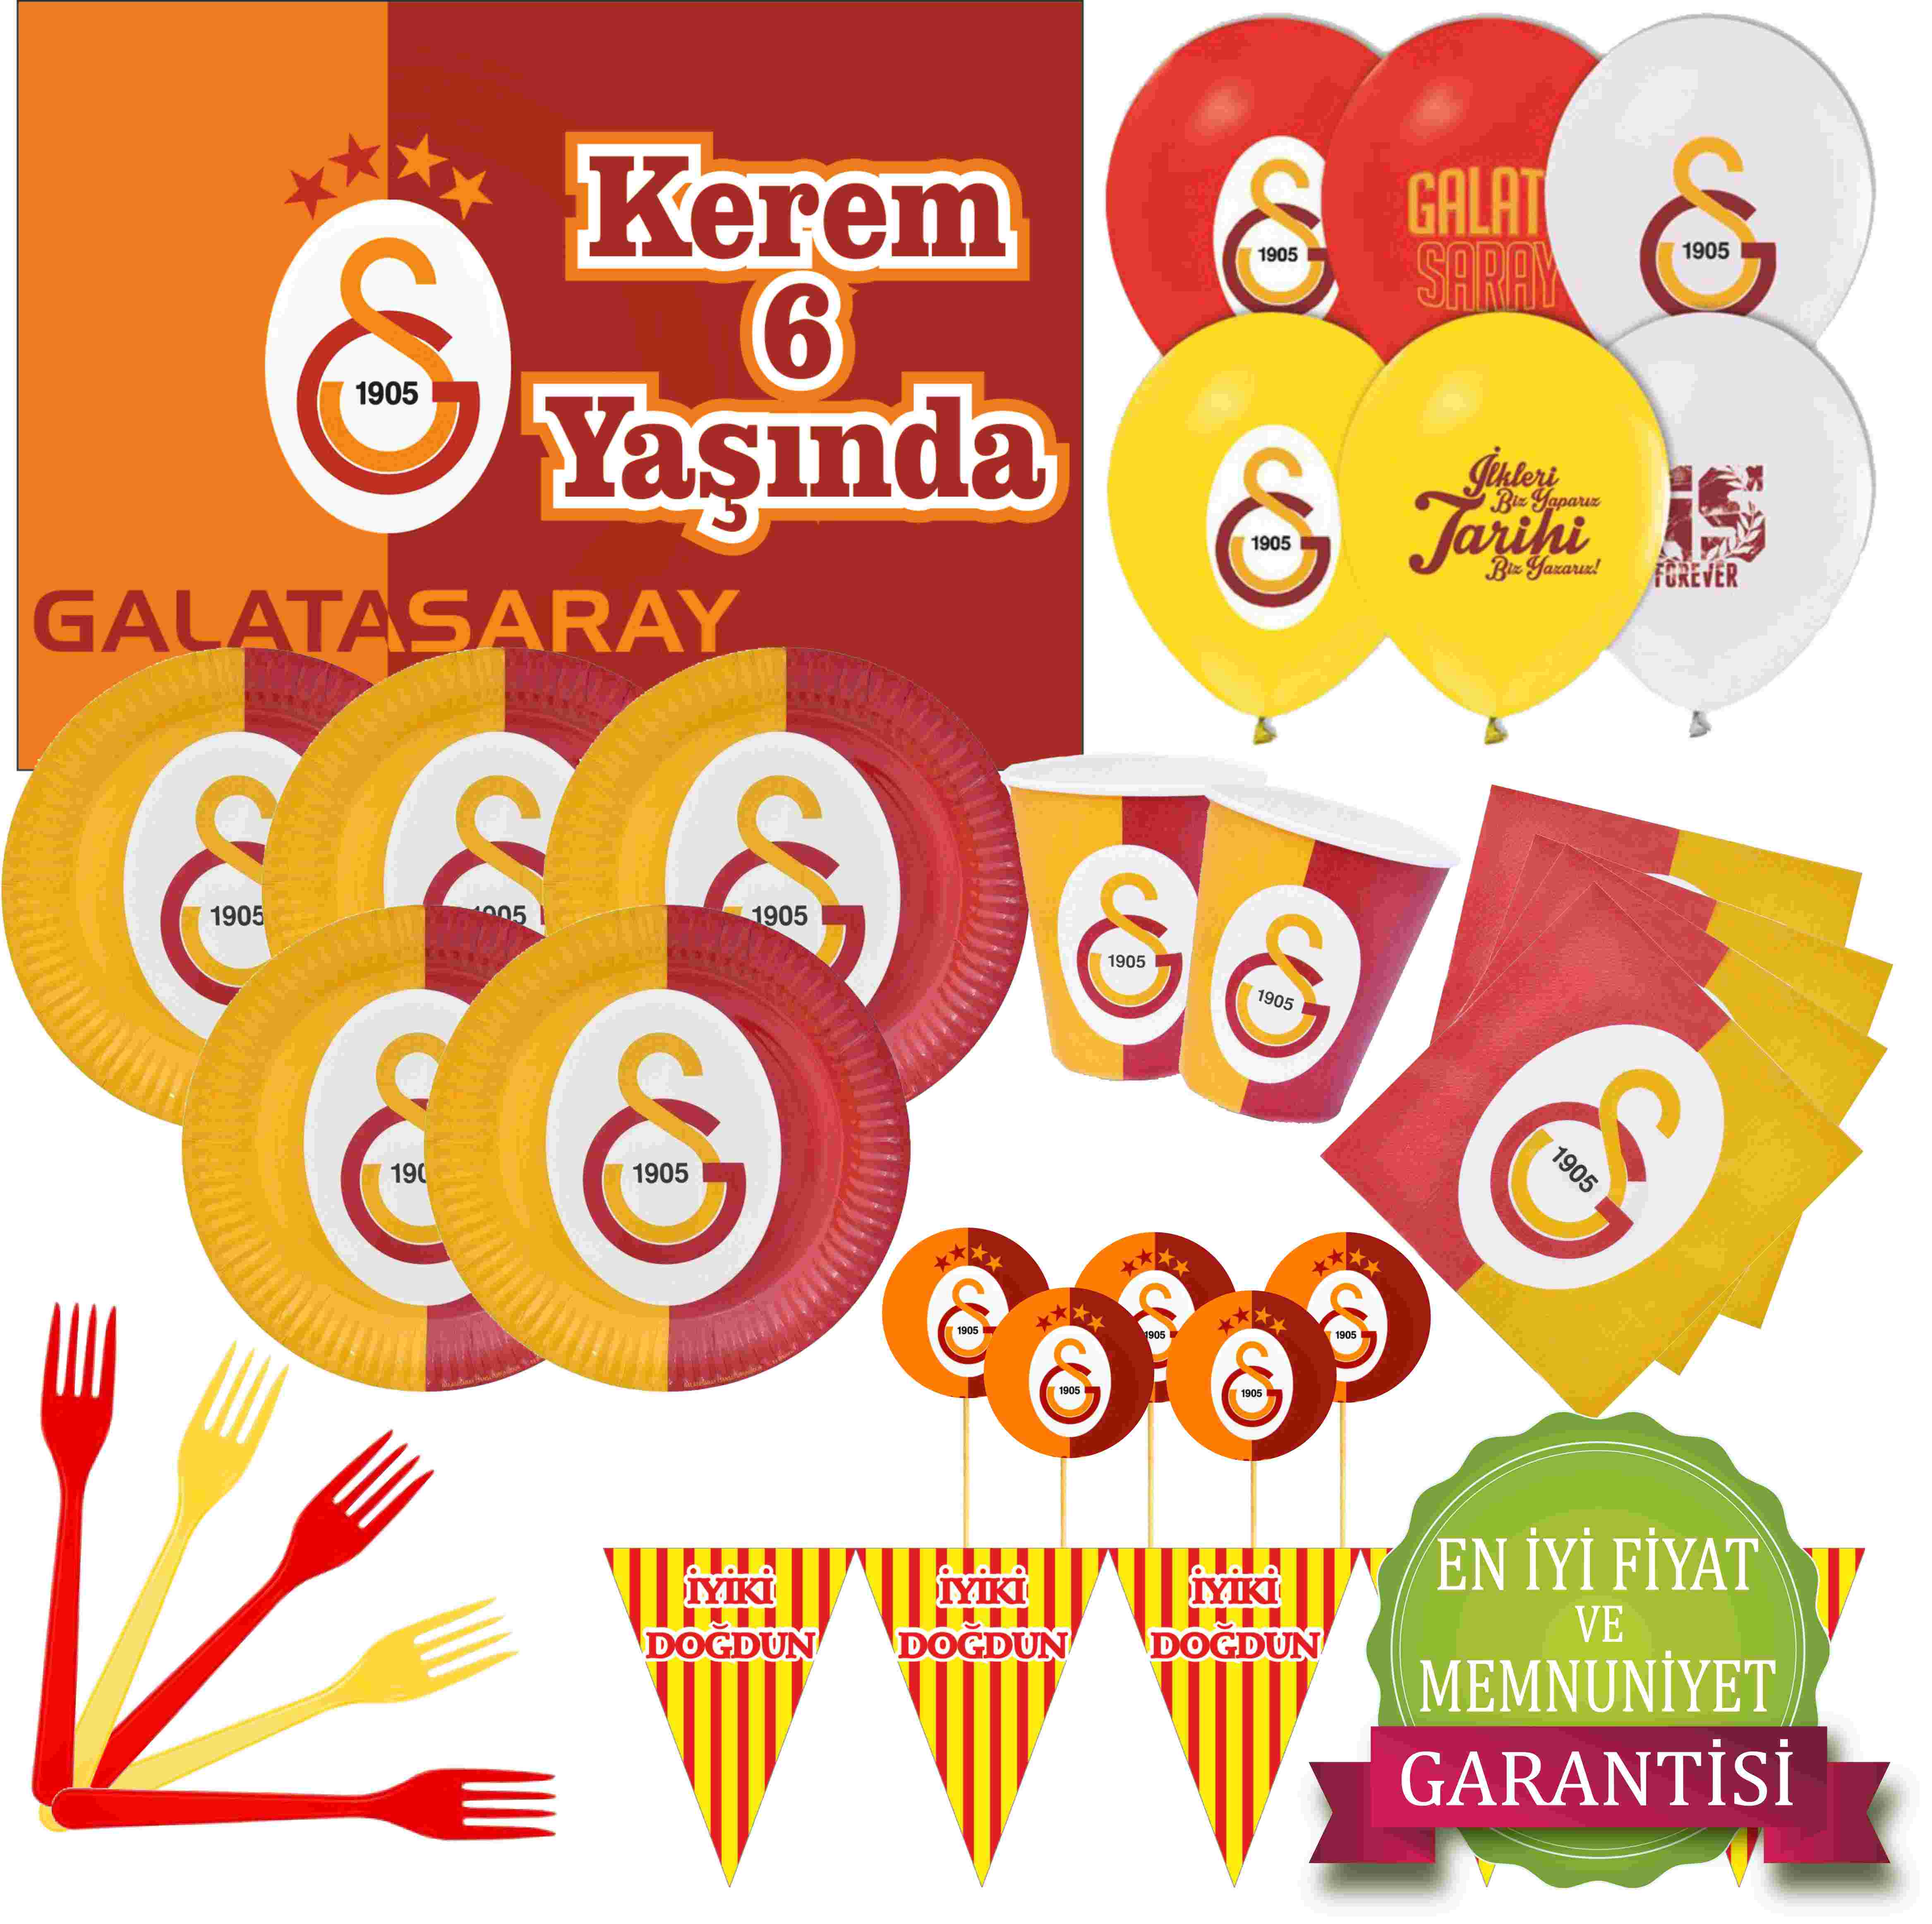 24 Kişilik Galatasaray Doğum Günü Seti, Galatasaray Parti Seti